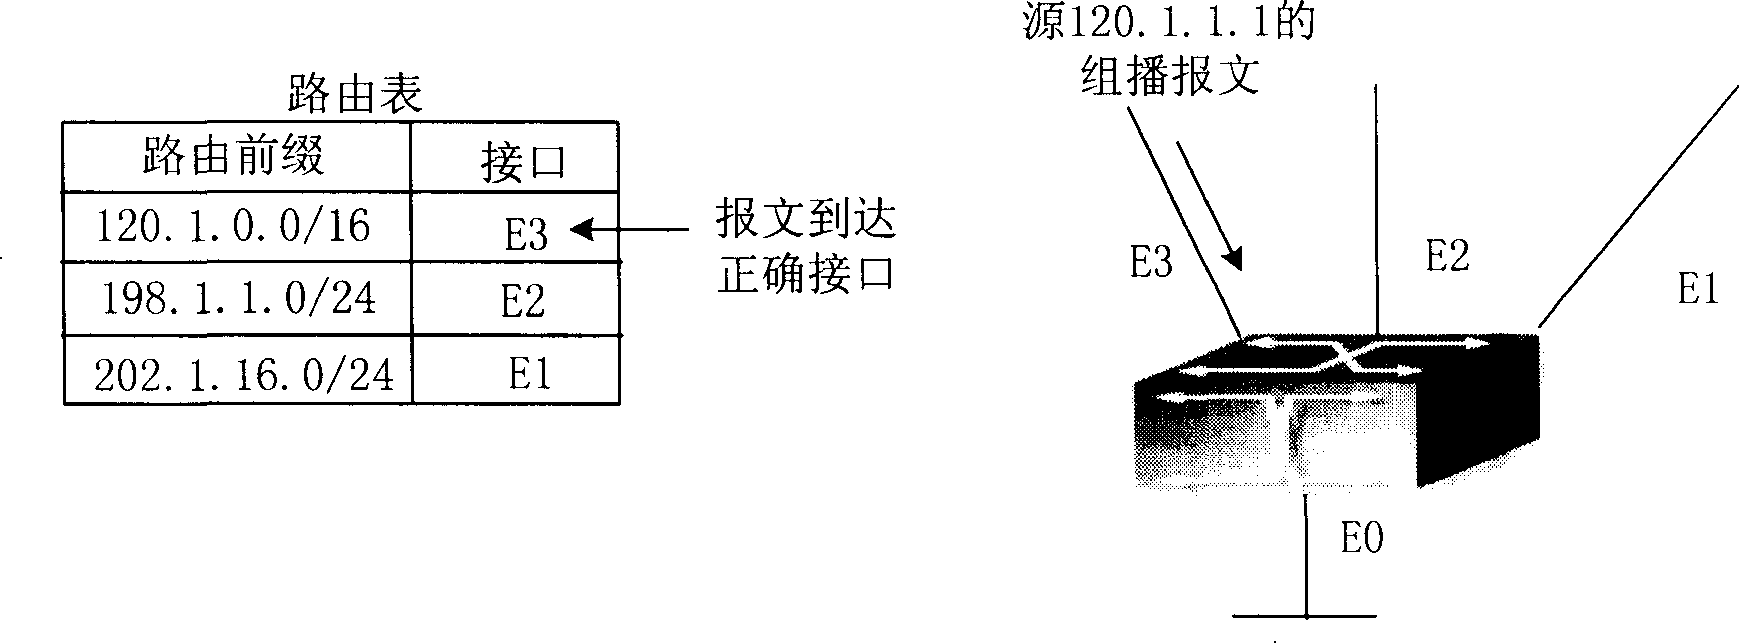 Method for realizing URPF on Ethernet switch